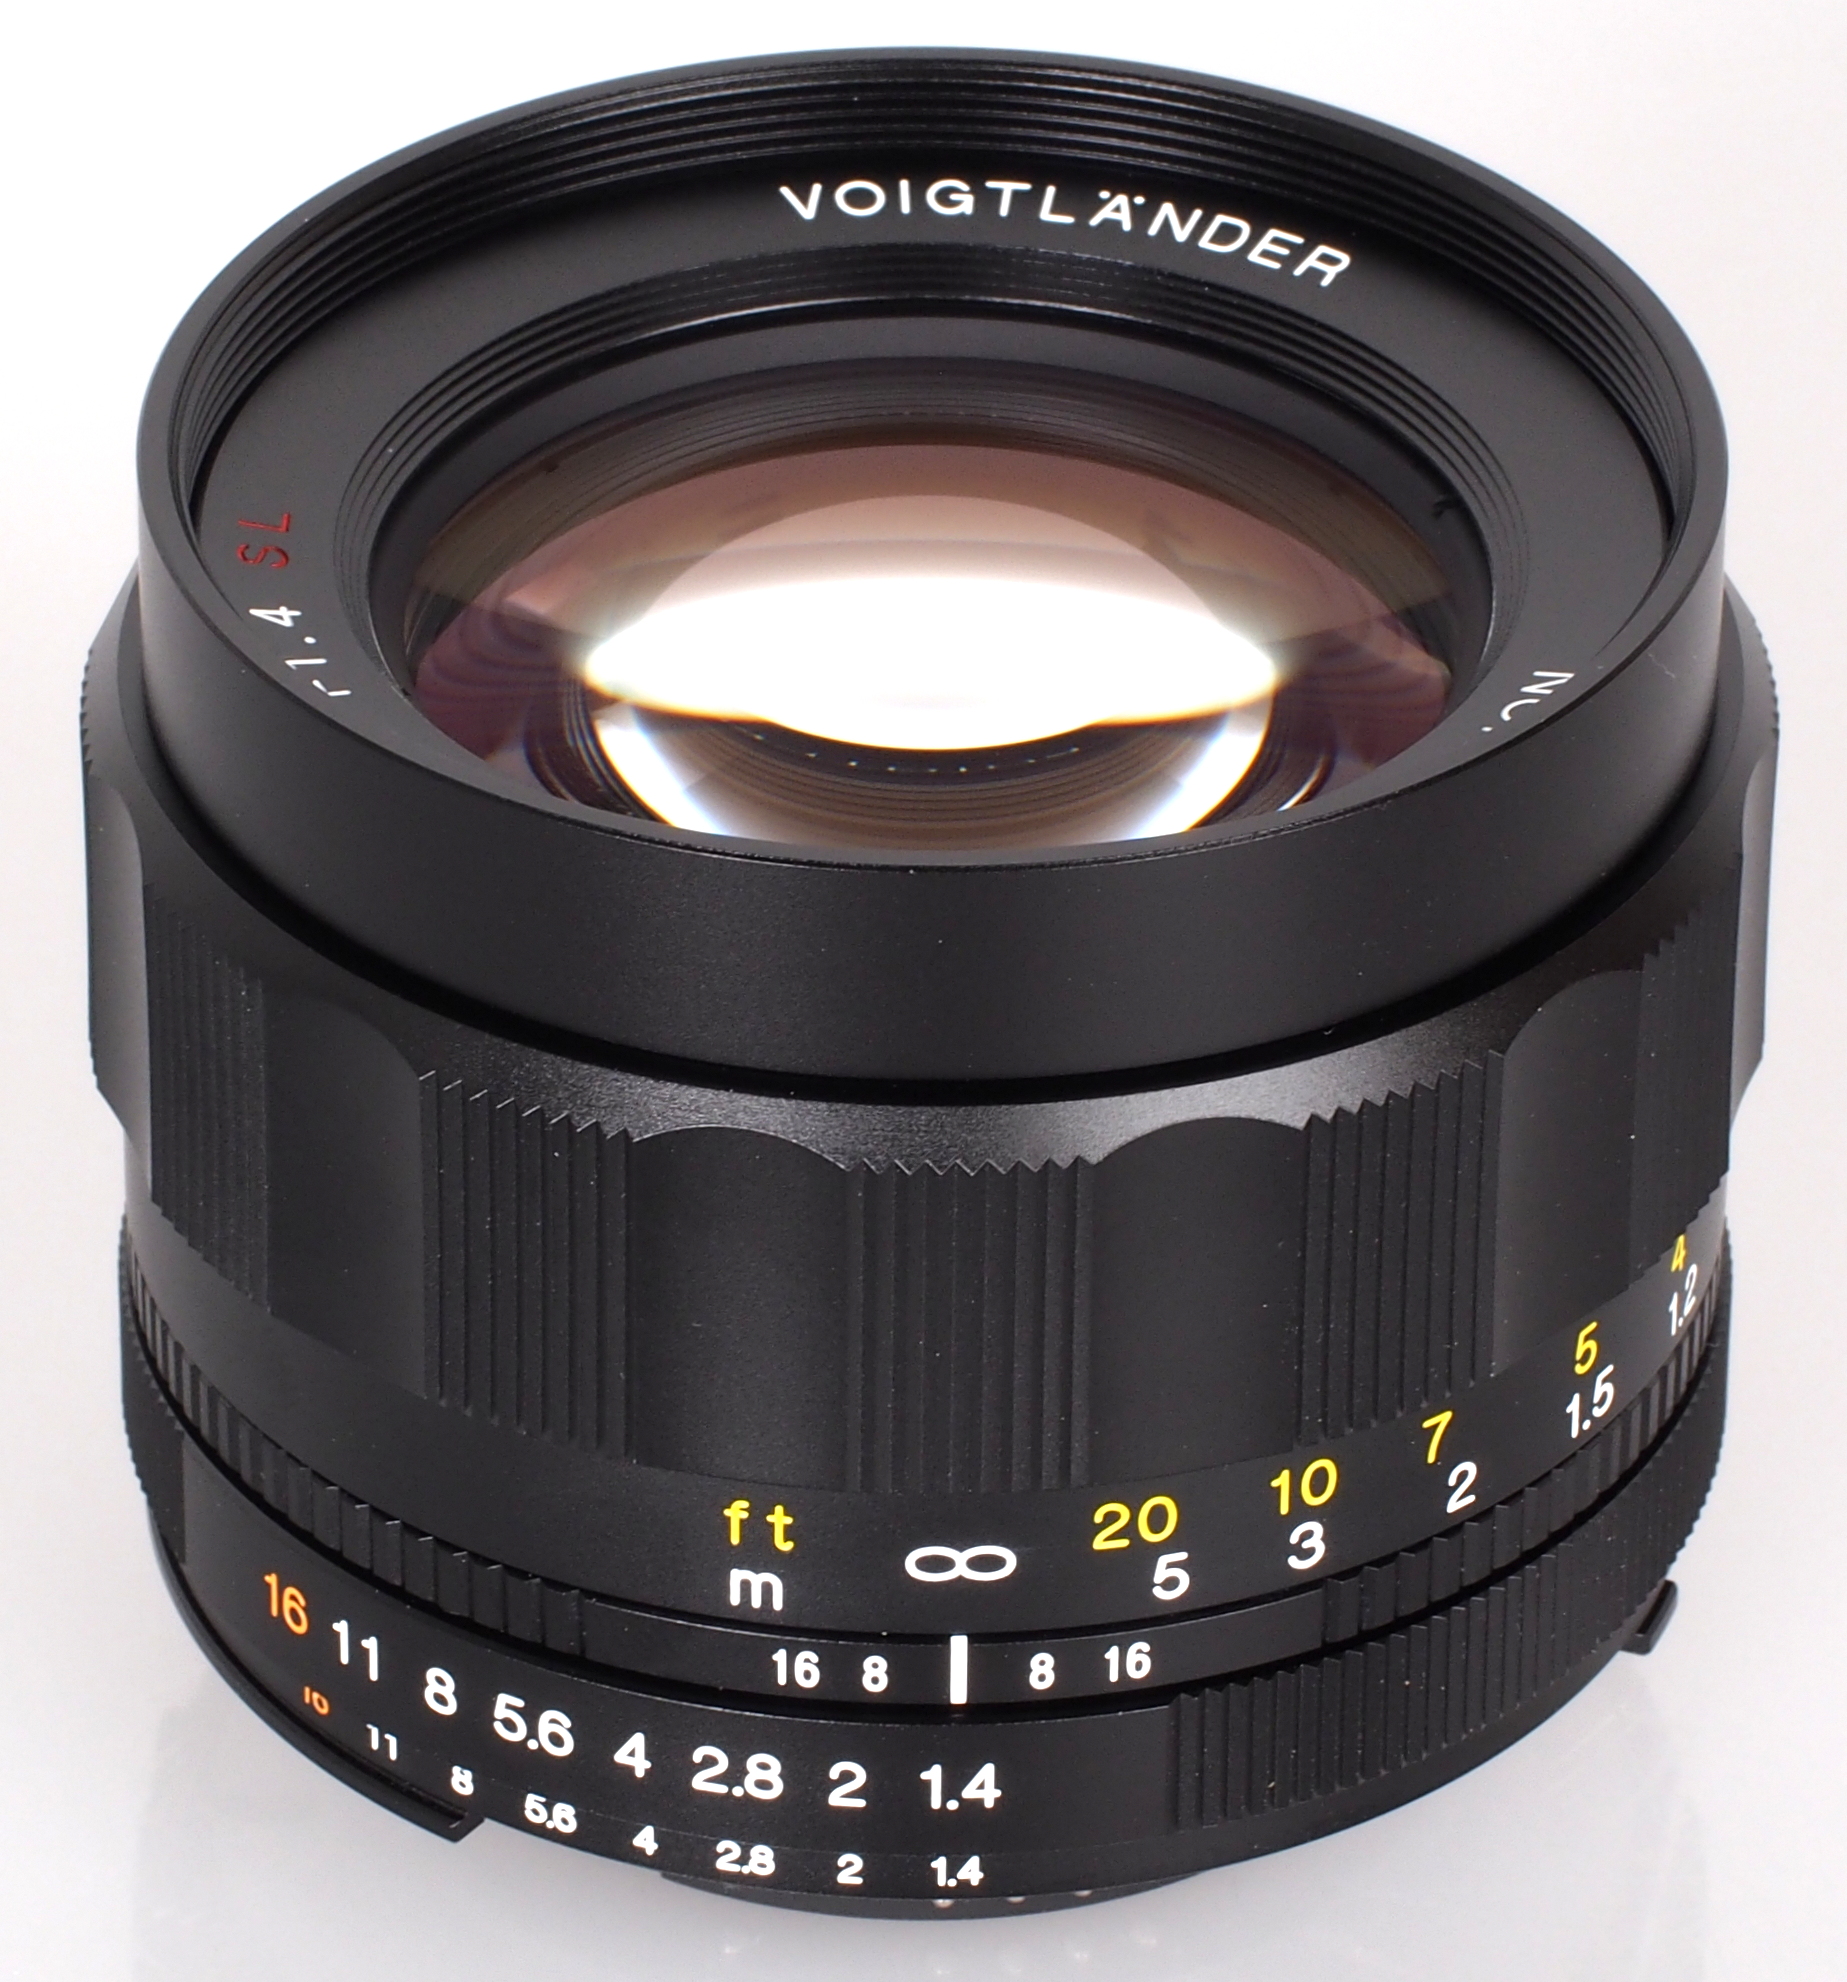 Voigtlander Nokton 58mm f/1.4 SL II Lens Review